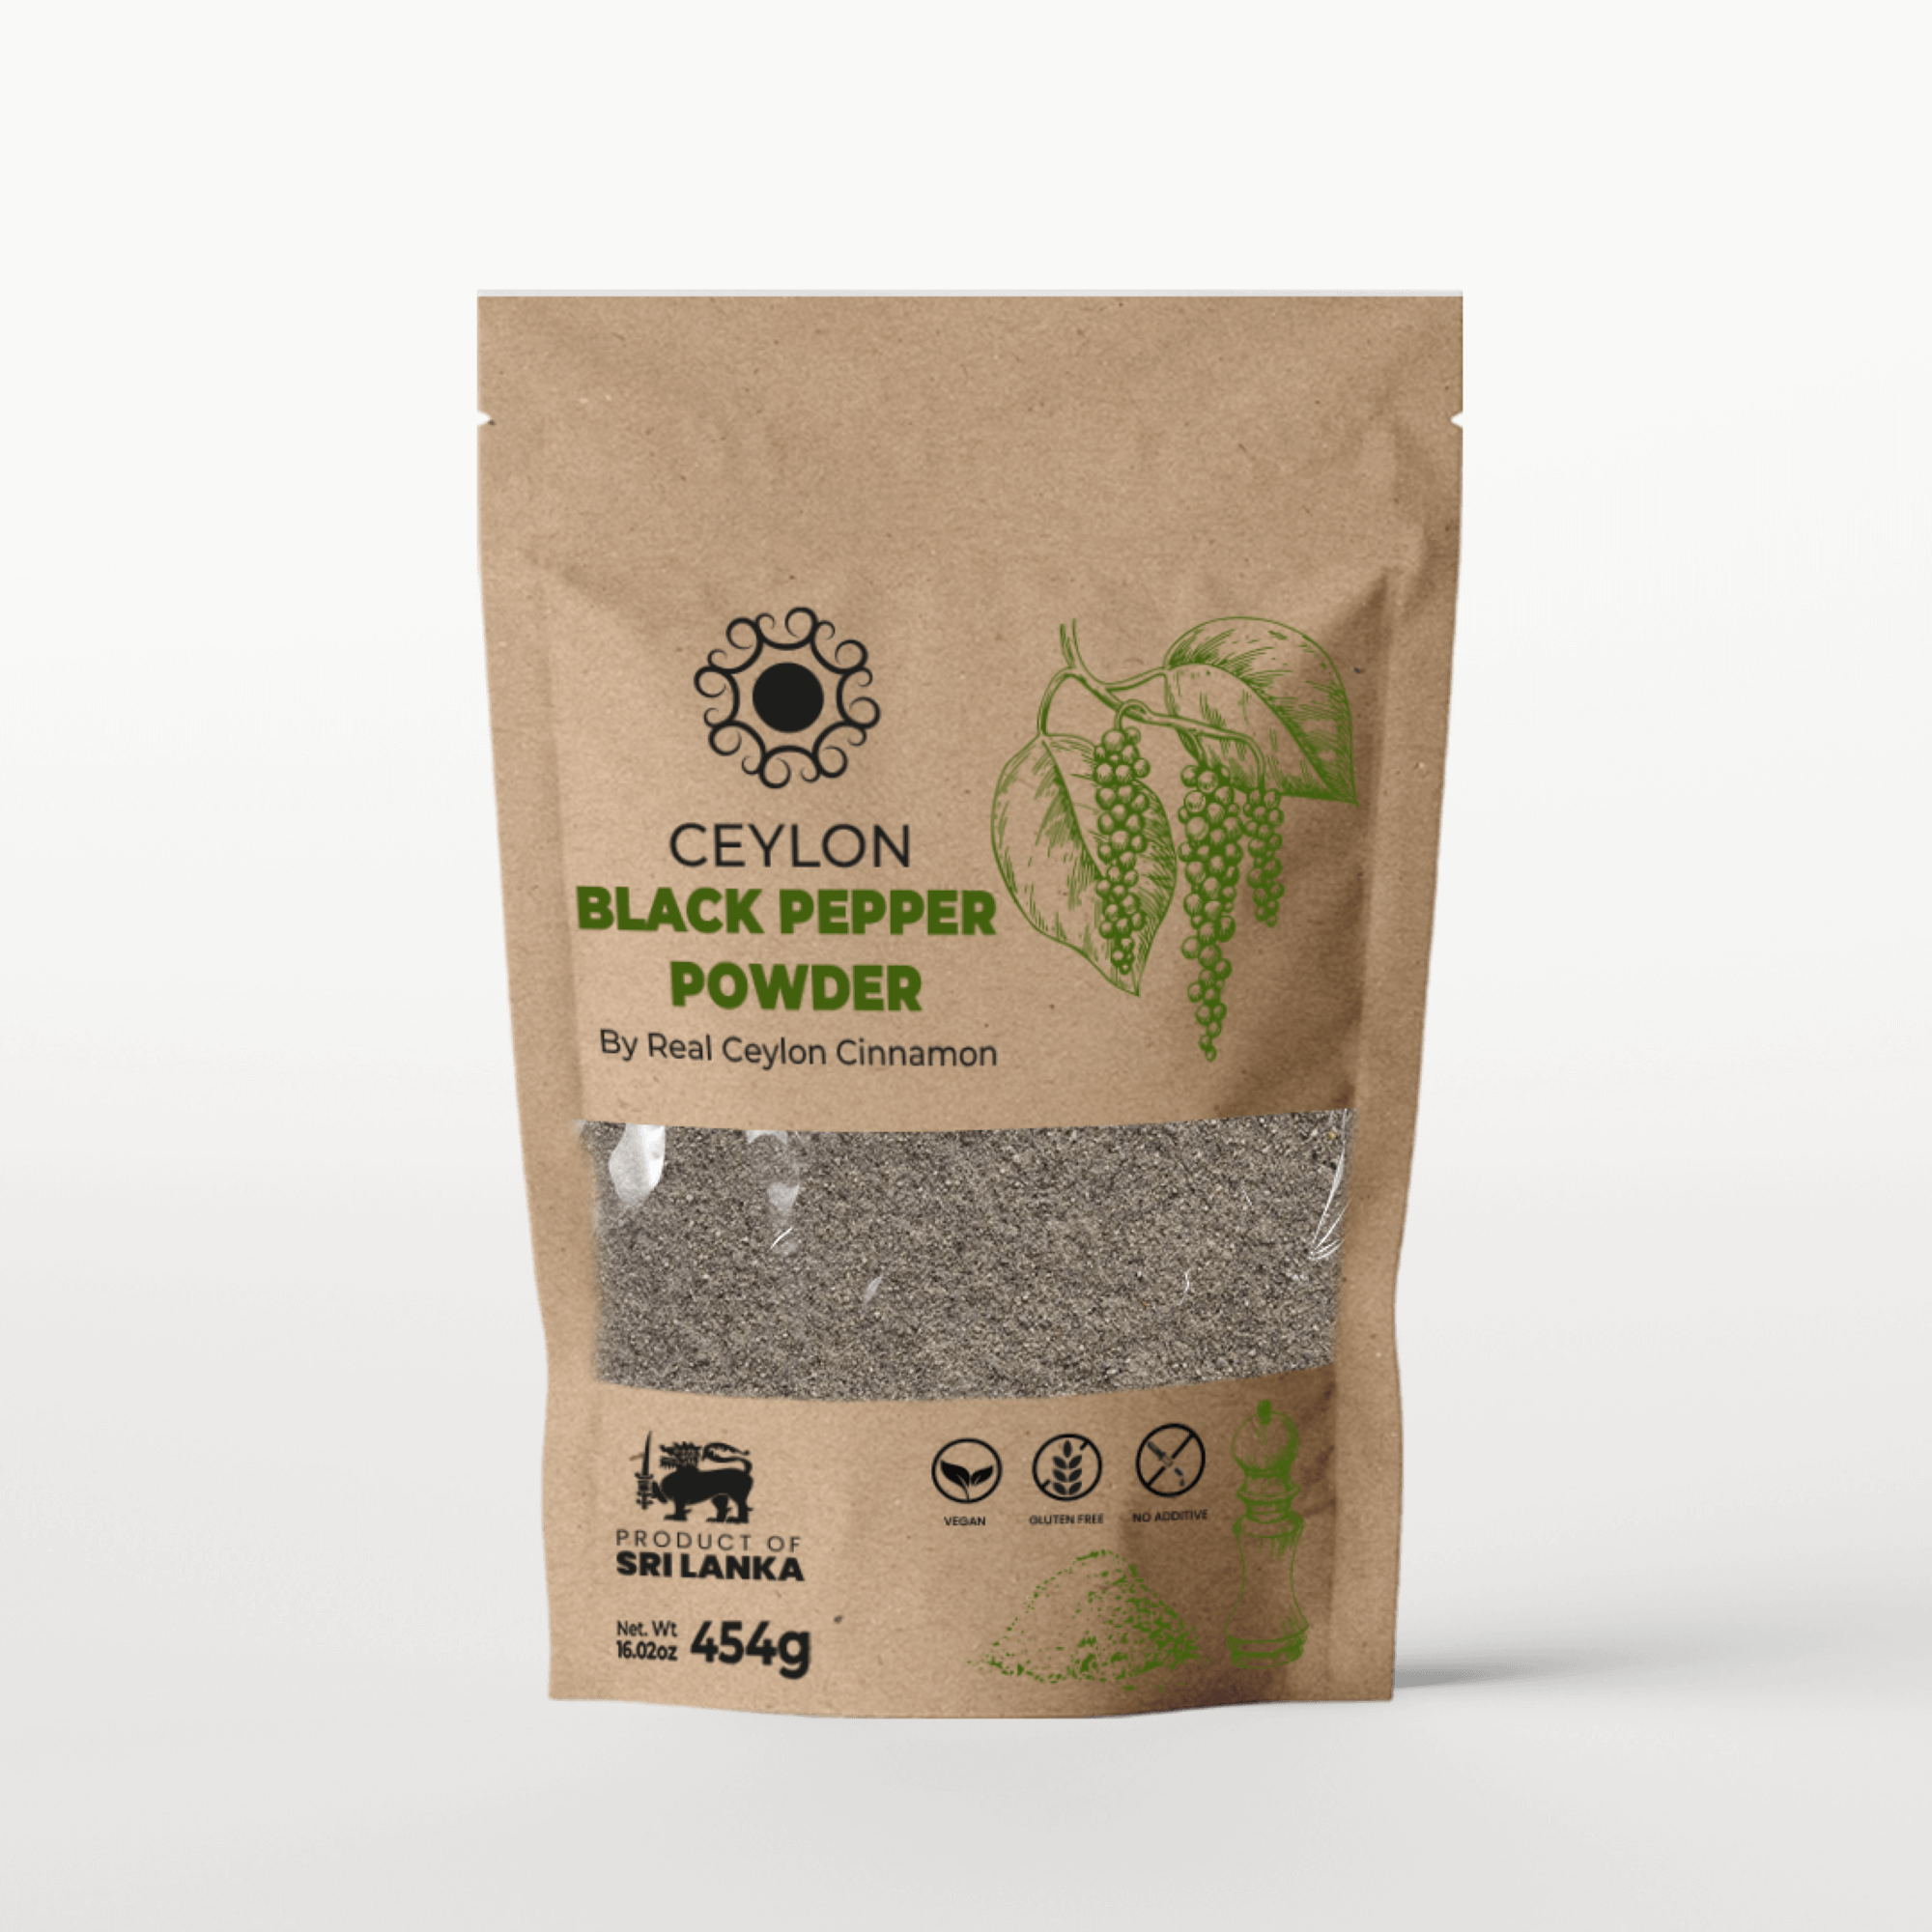 Black pepper powder 454g